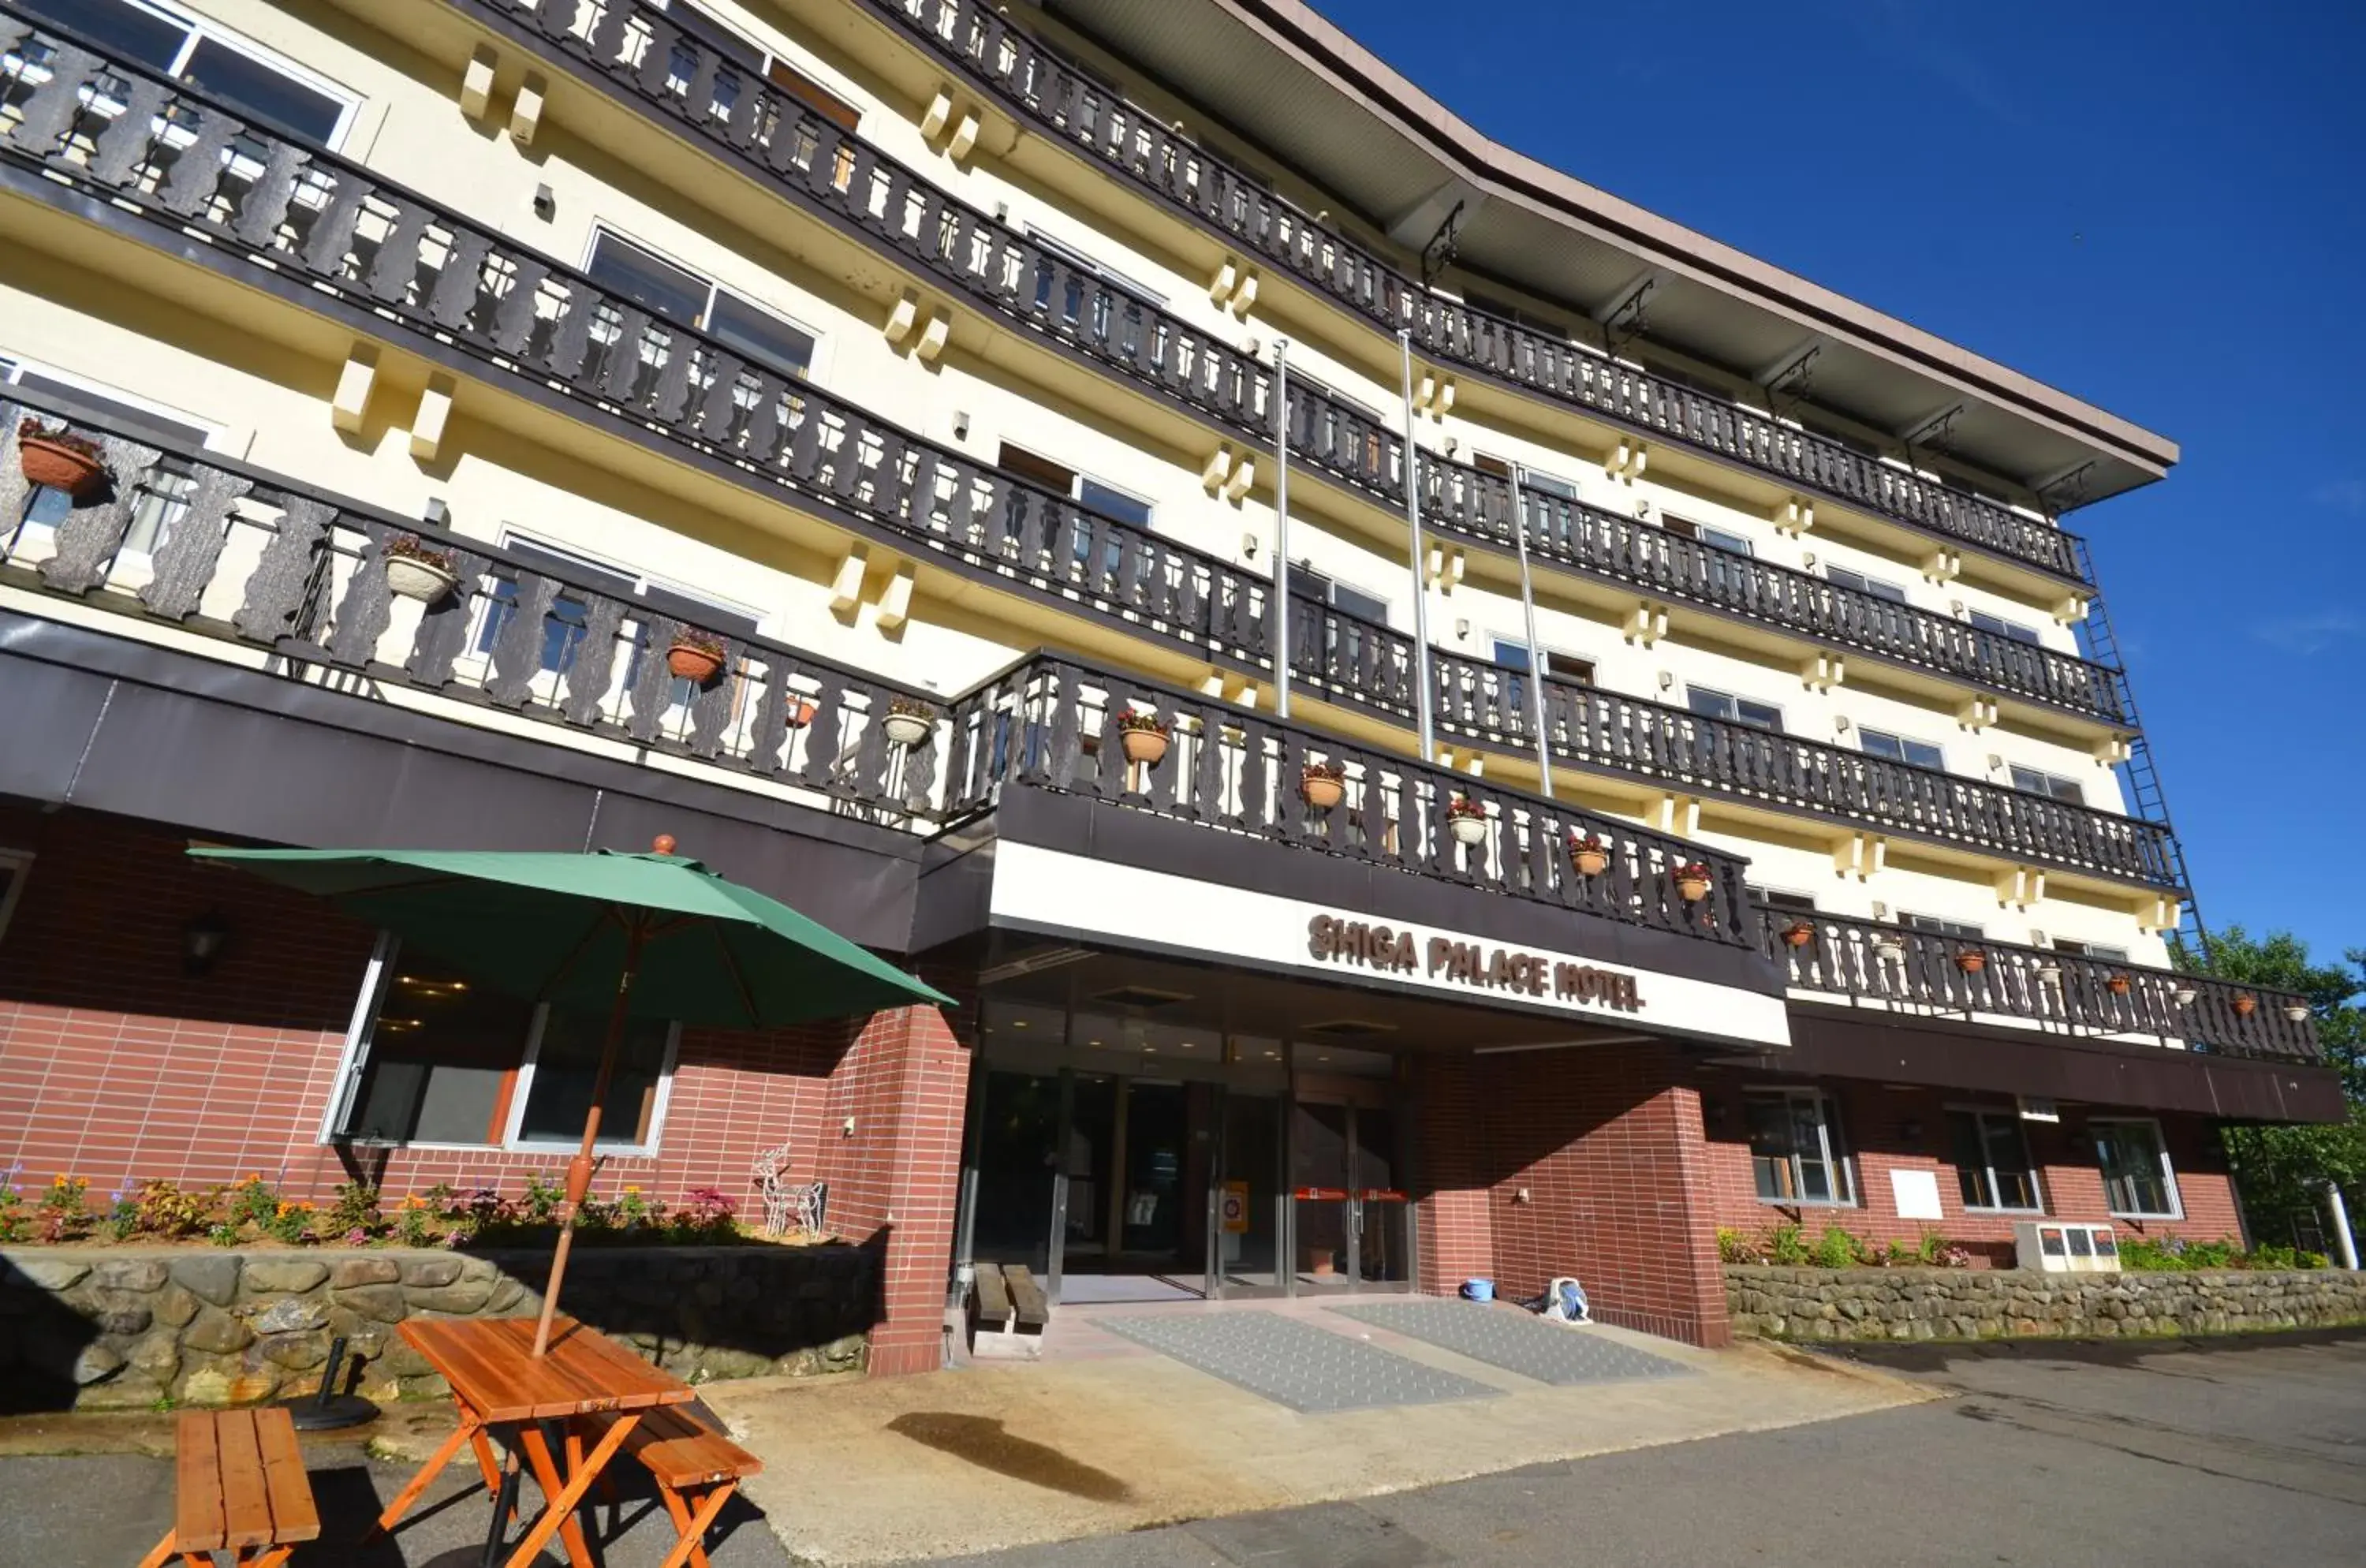 Nearby landmark, Facade/Entrance in Shiga Palace Hotel